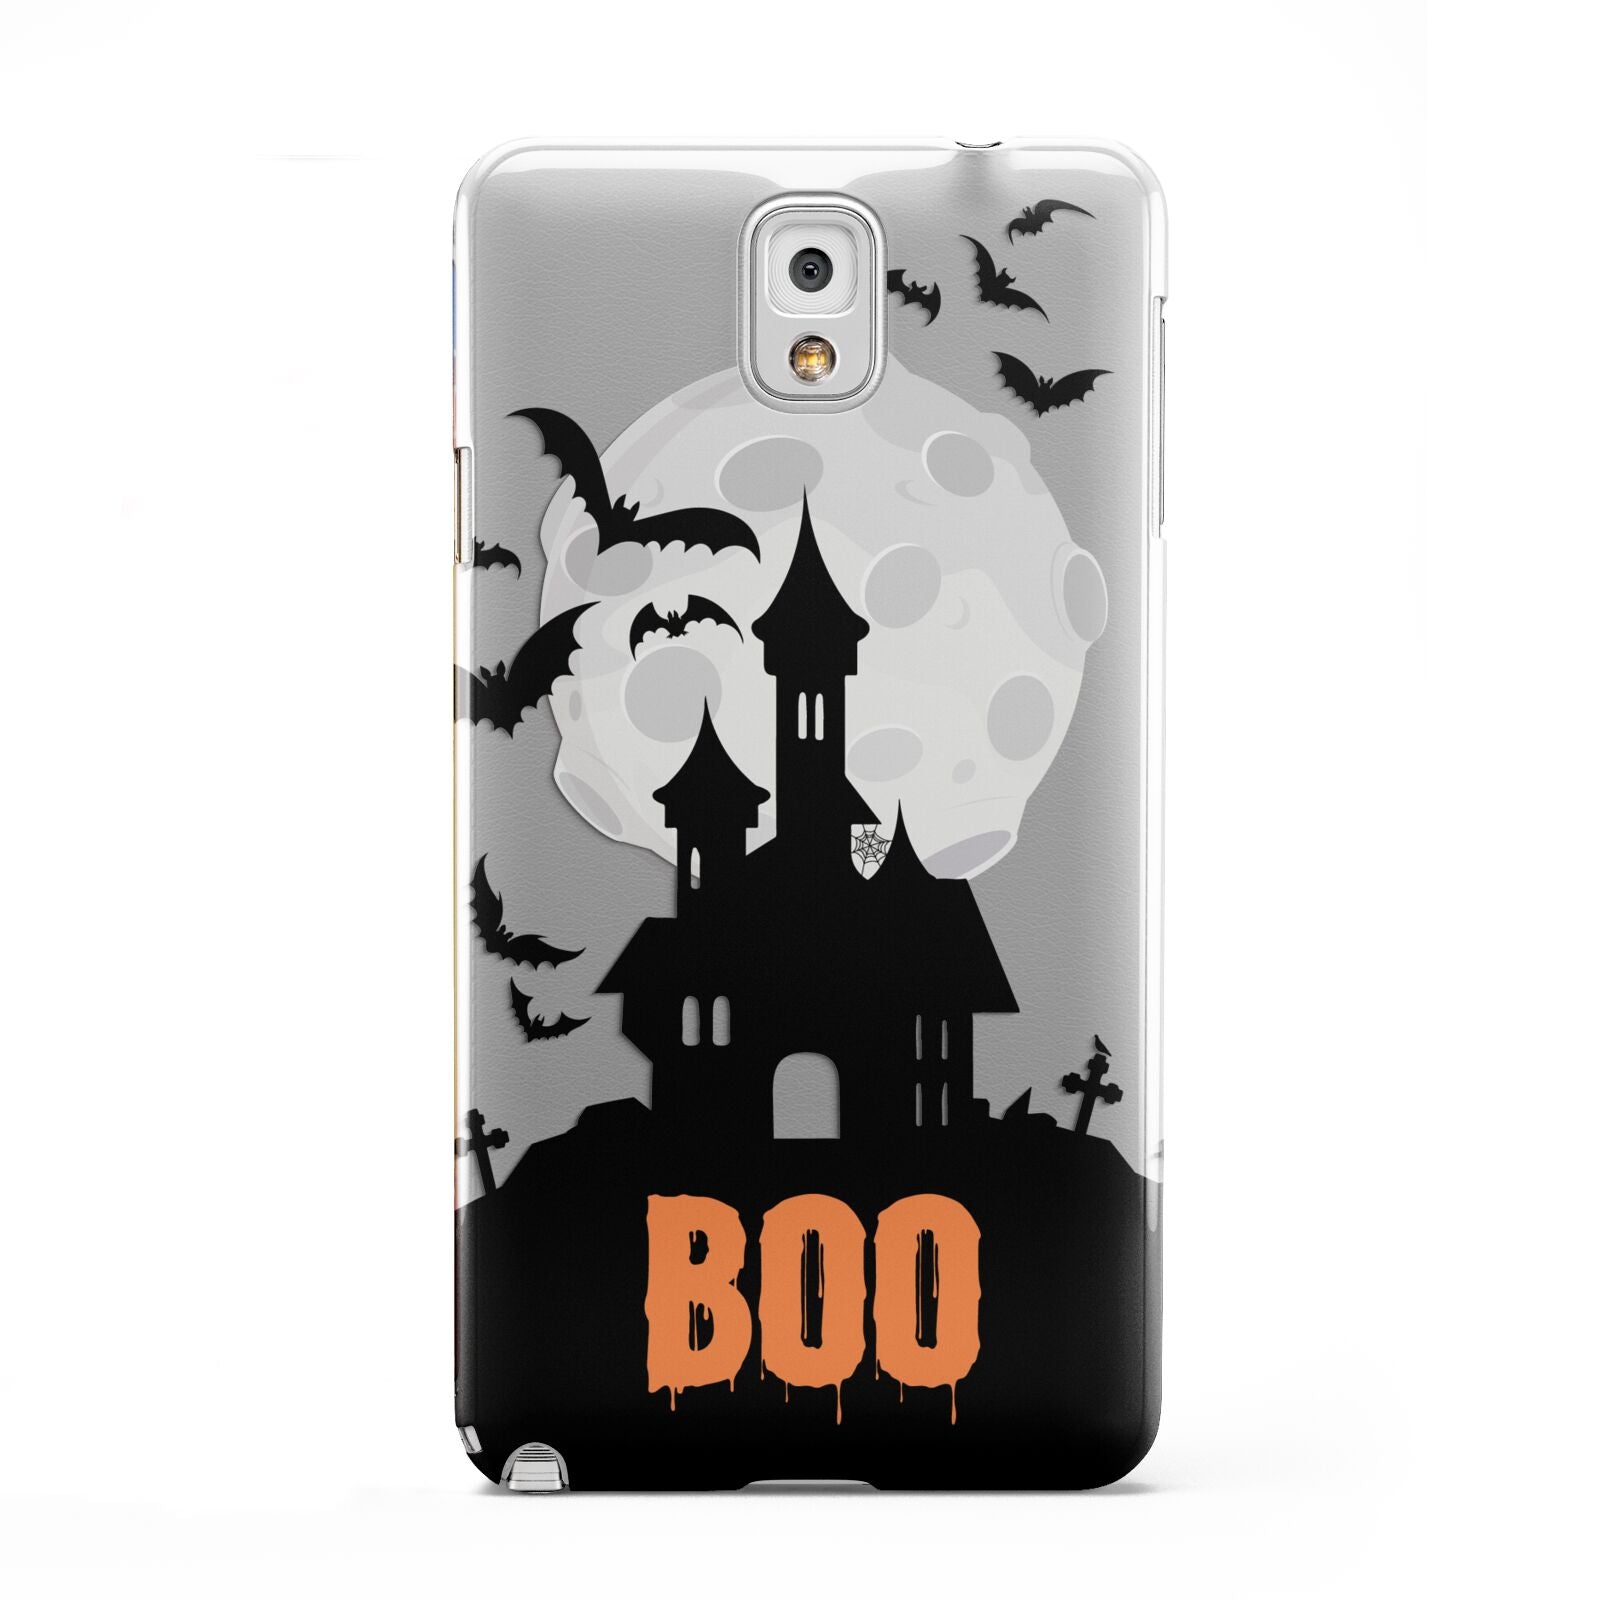 Boo Gothic Black Halloween Samsung Galaxy Note 3 Case